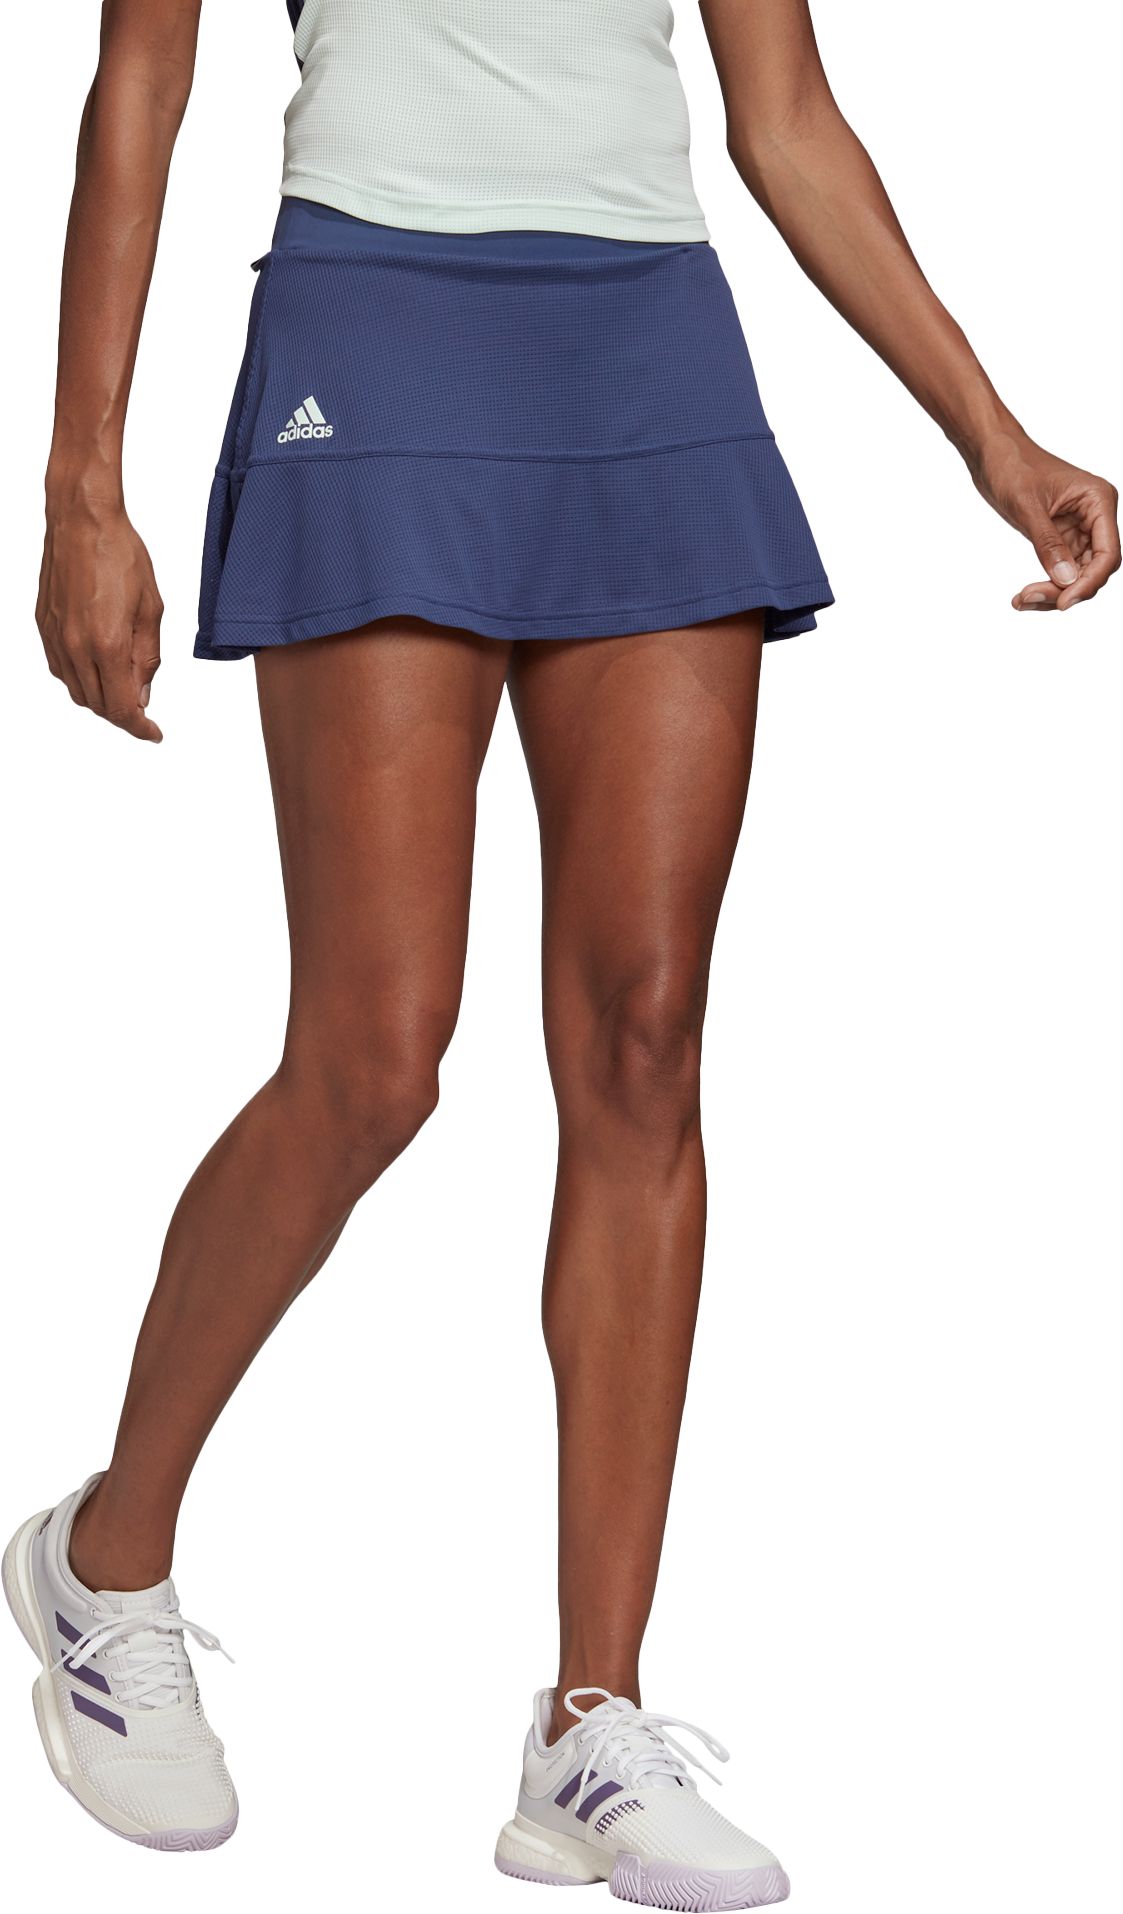 adidas womens tennis skirts